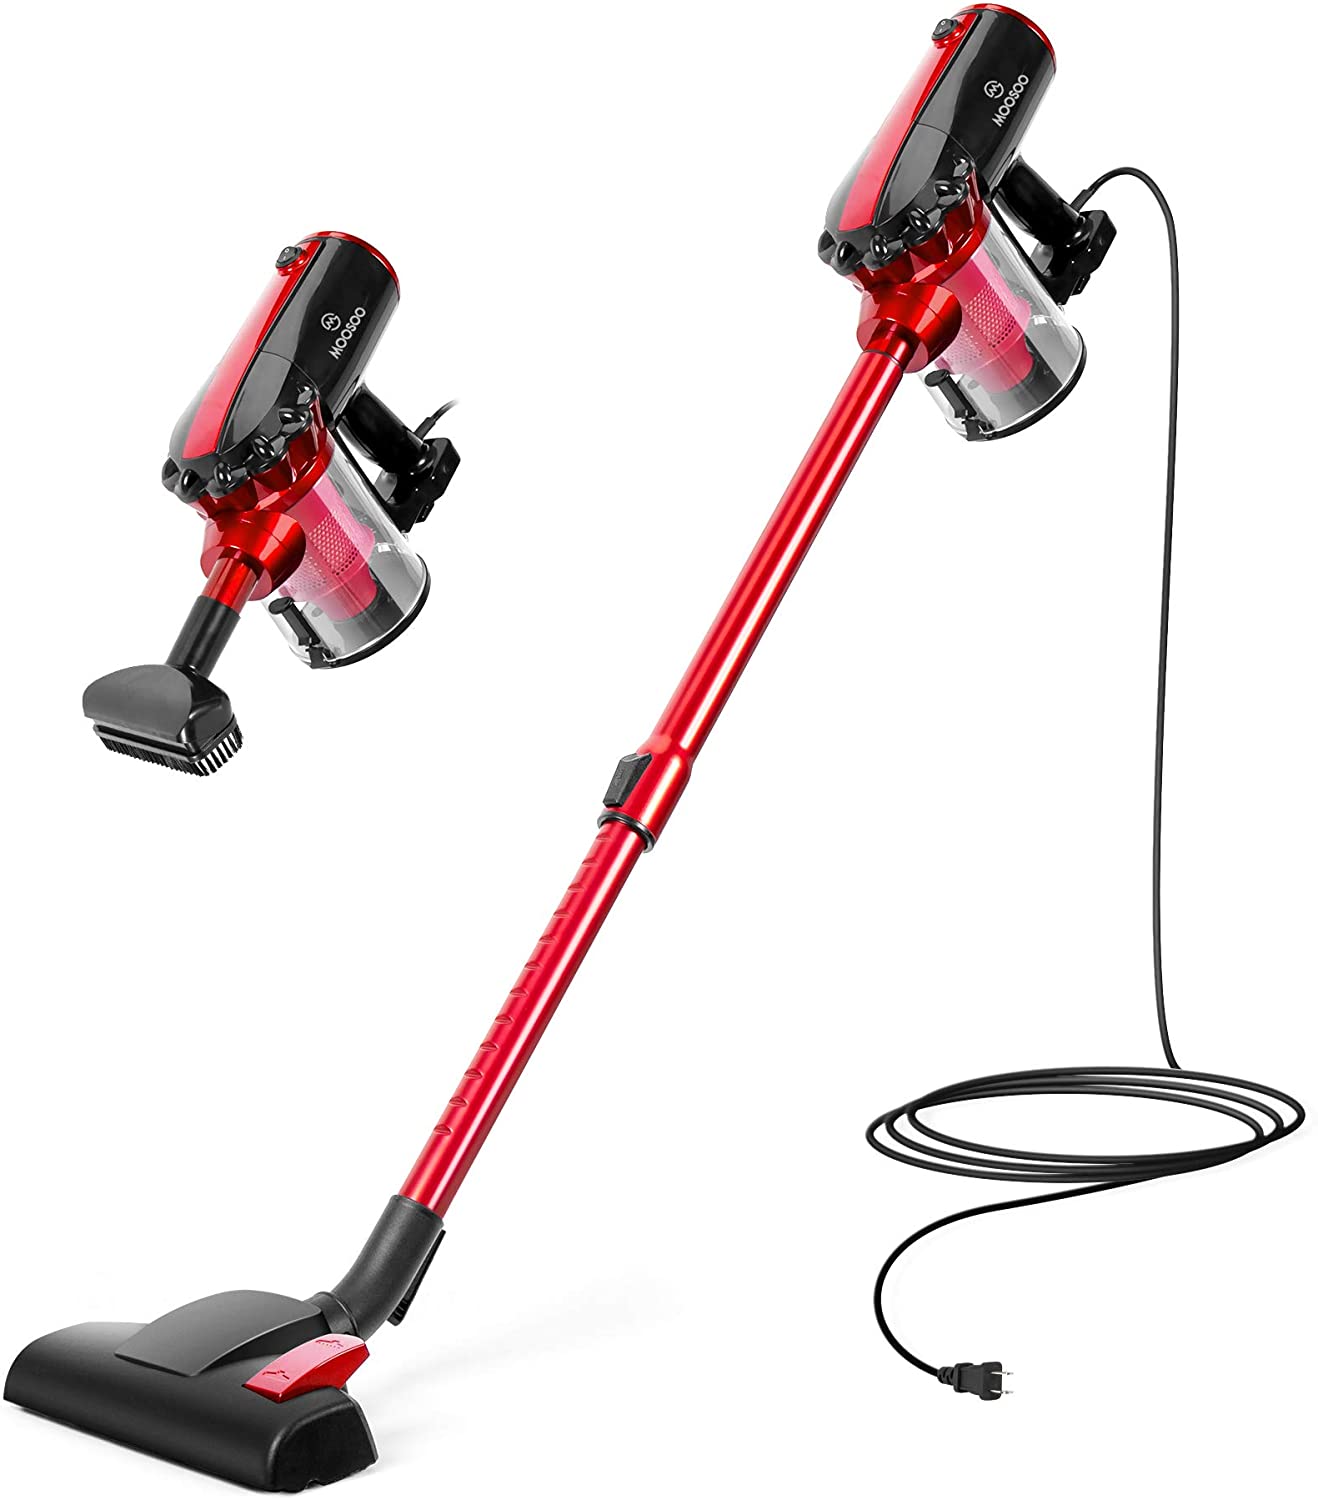 MOOSOO Lightweight Corded Stick Vacuum 2 in 1 Handheld Vacuum, D600 $39 + Free Shipping $39.99